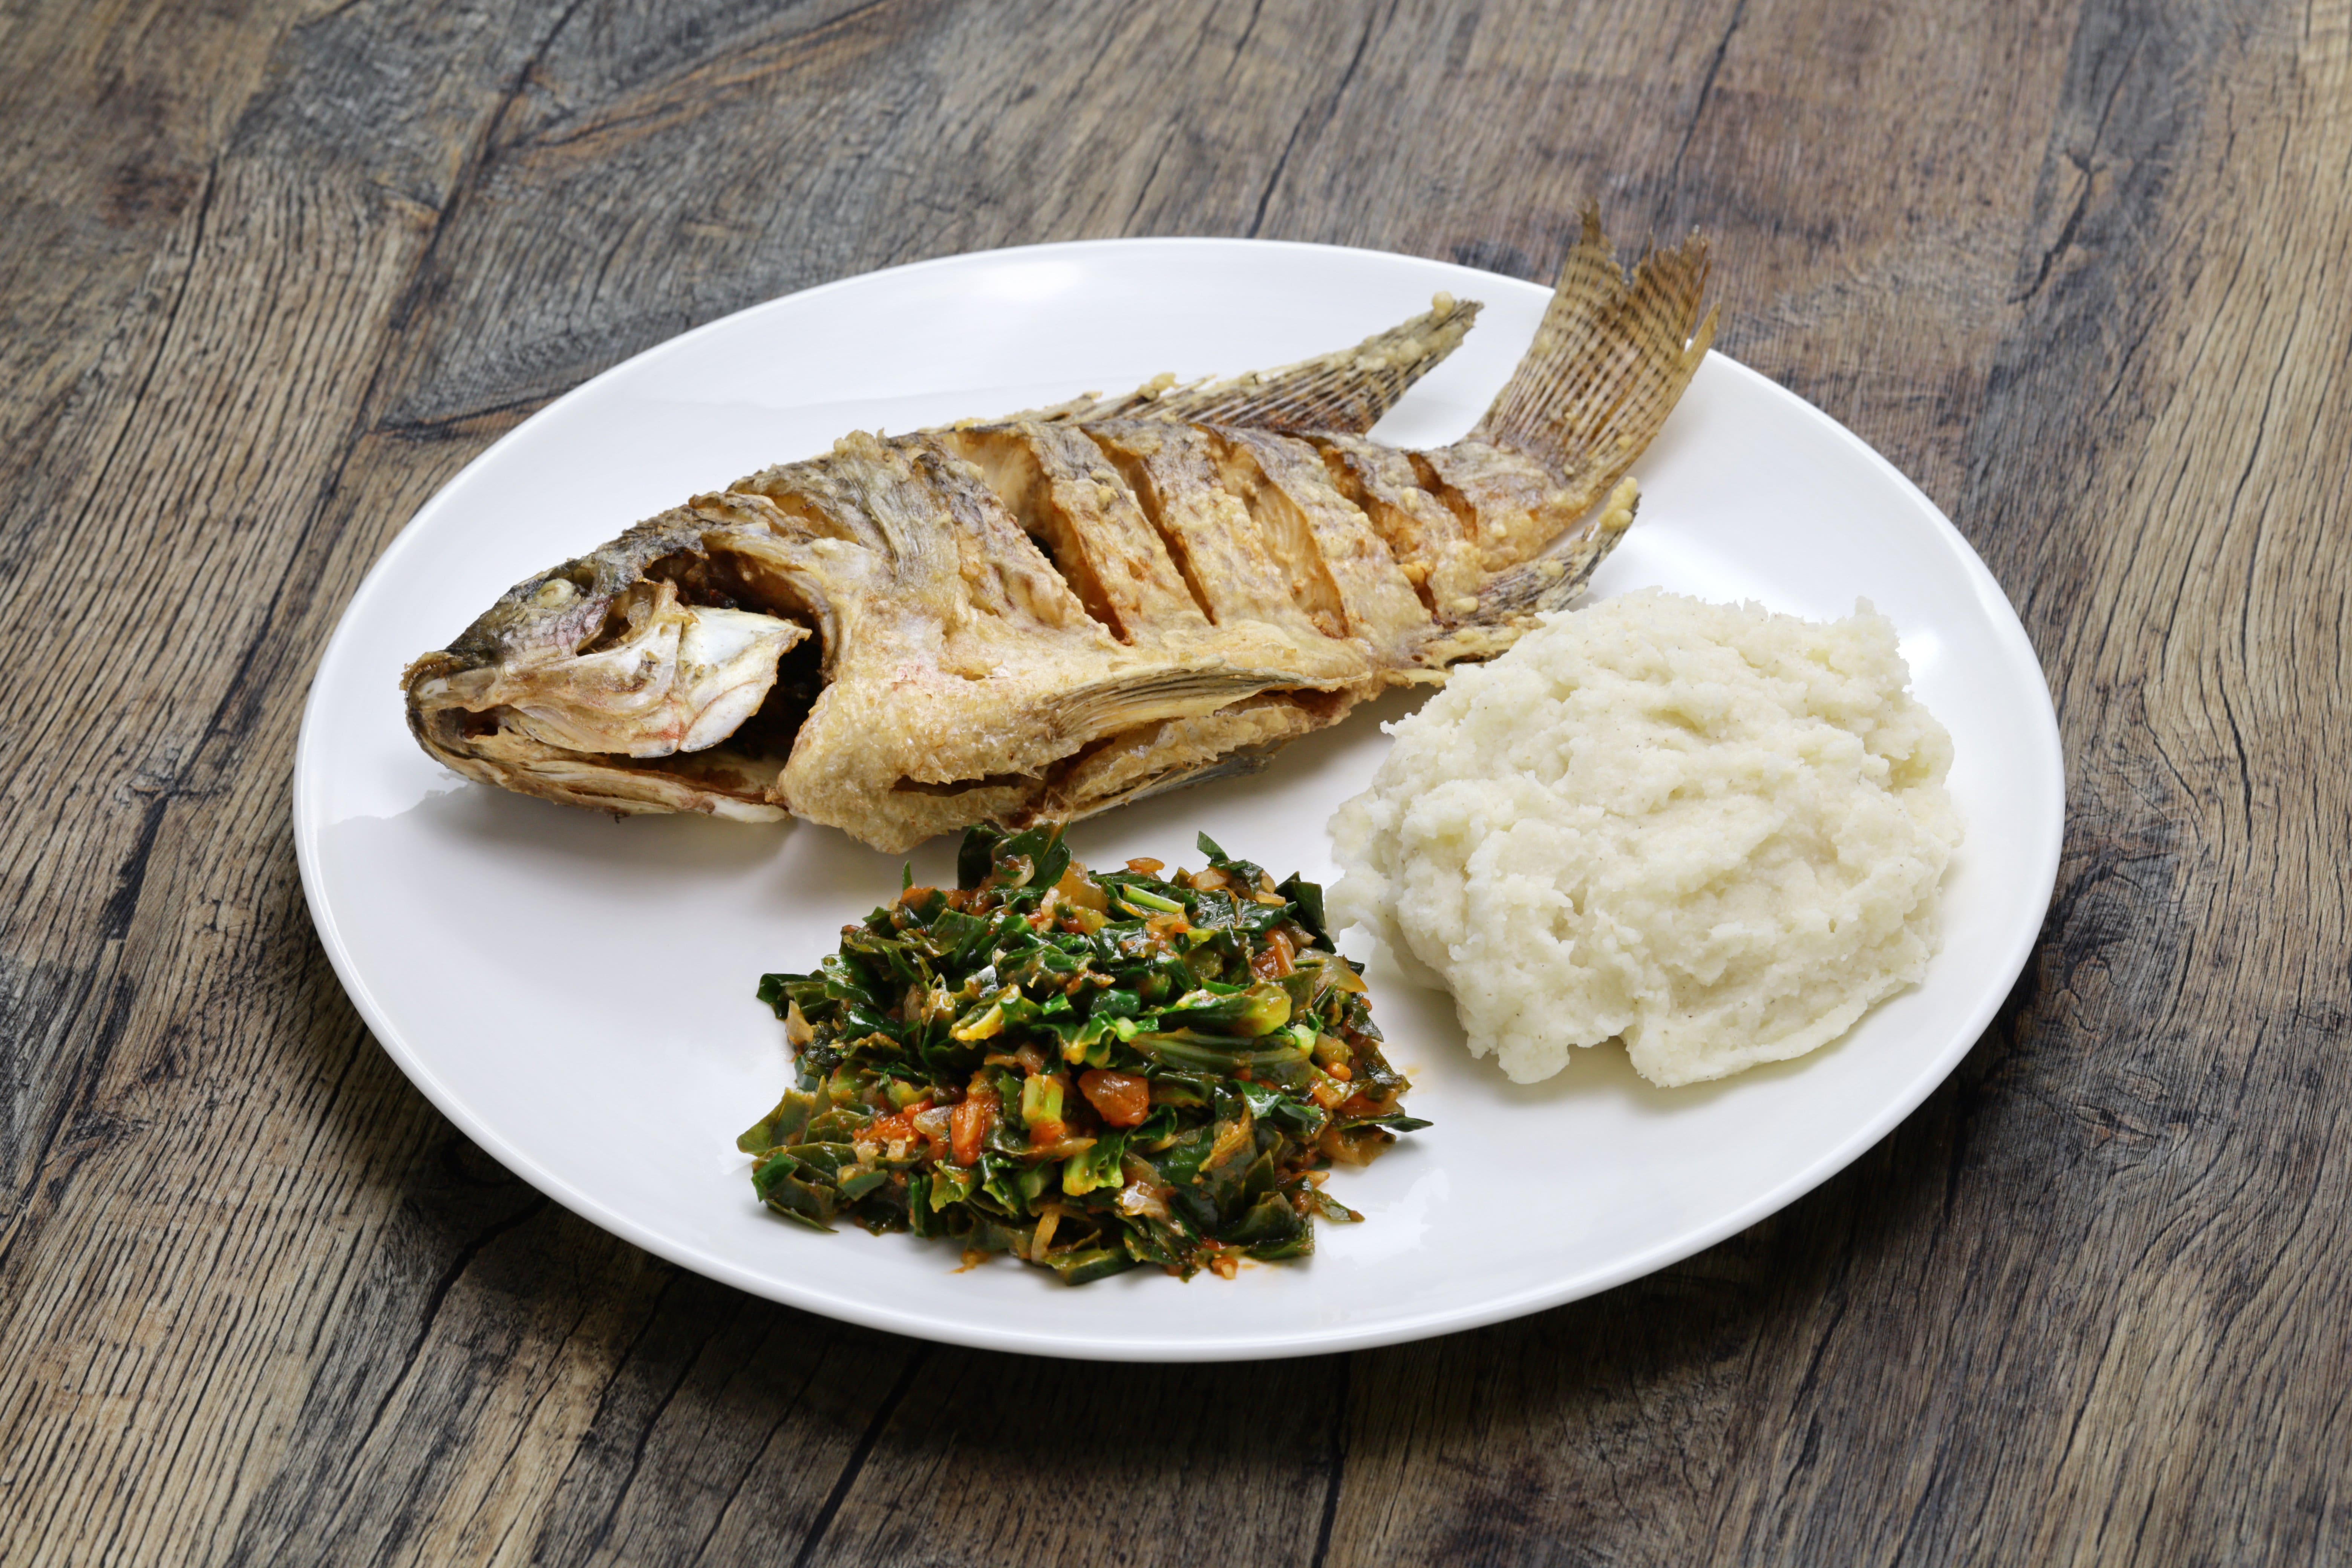 fried fish(Tilapia), ugali(white maize flour mash) and Sukuma Wiki(kale stew), Kenyan food